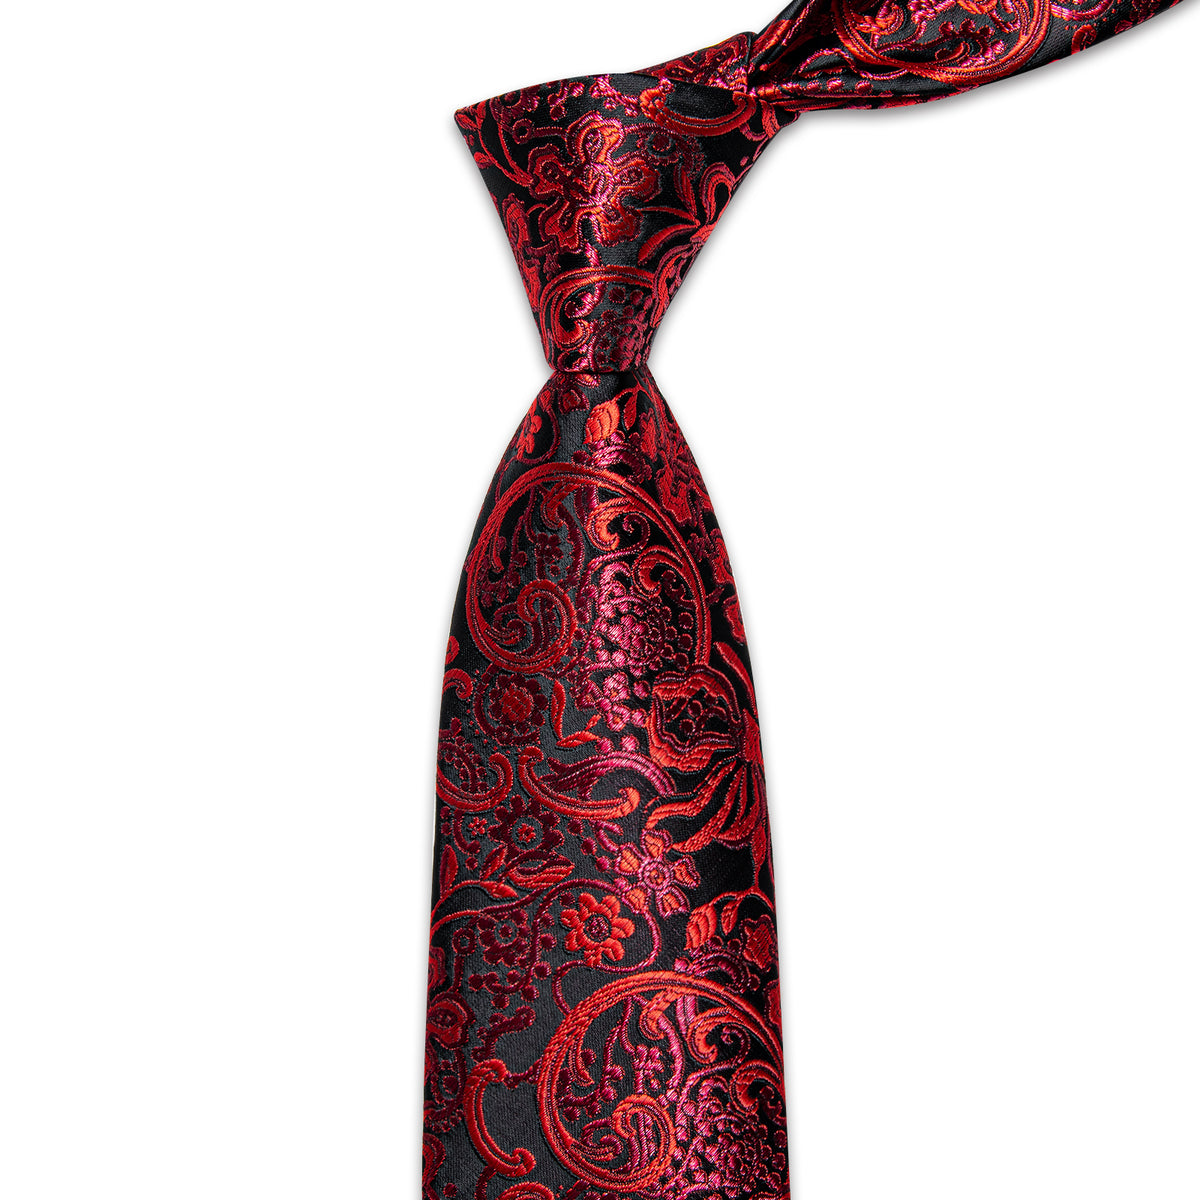 YourTies Red Black Floral Men's Necktie Pocket Square Cufflinks Set